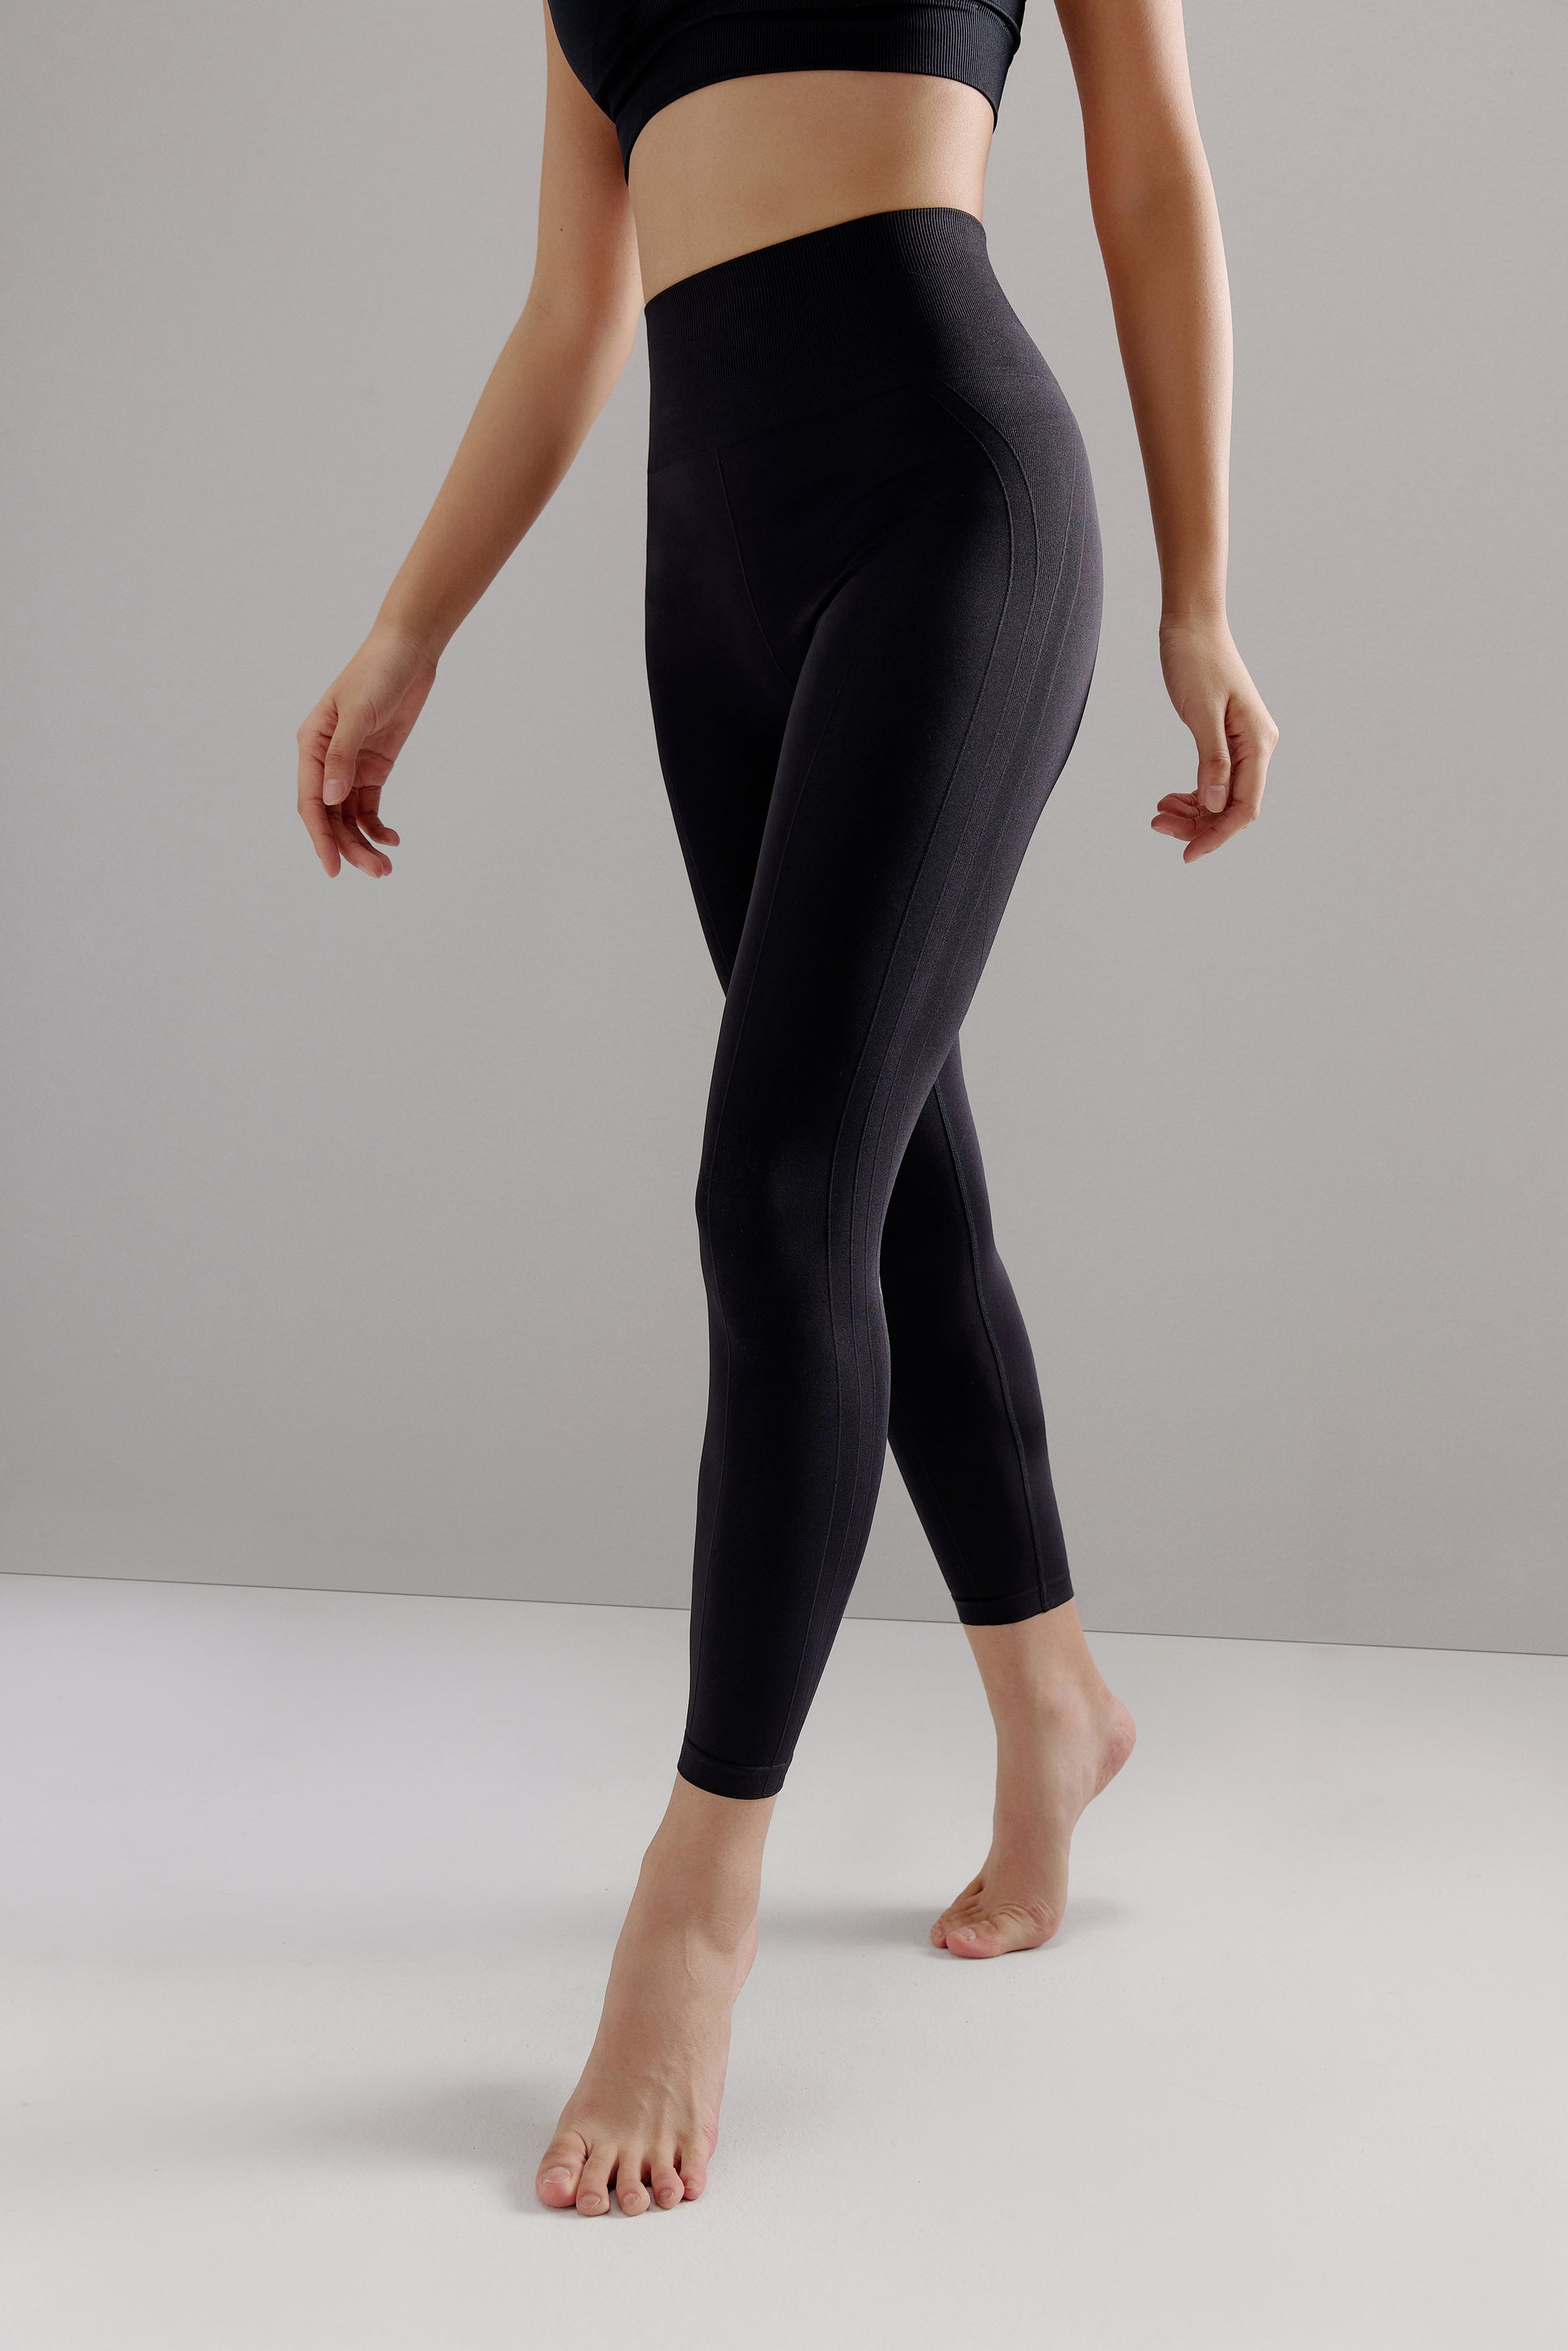 USA Pro, Core High Rise Seamless Leggings, Yoga Pants